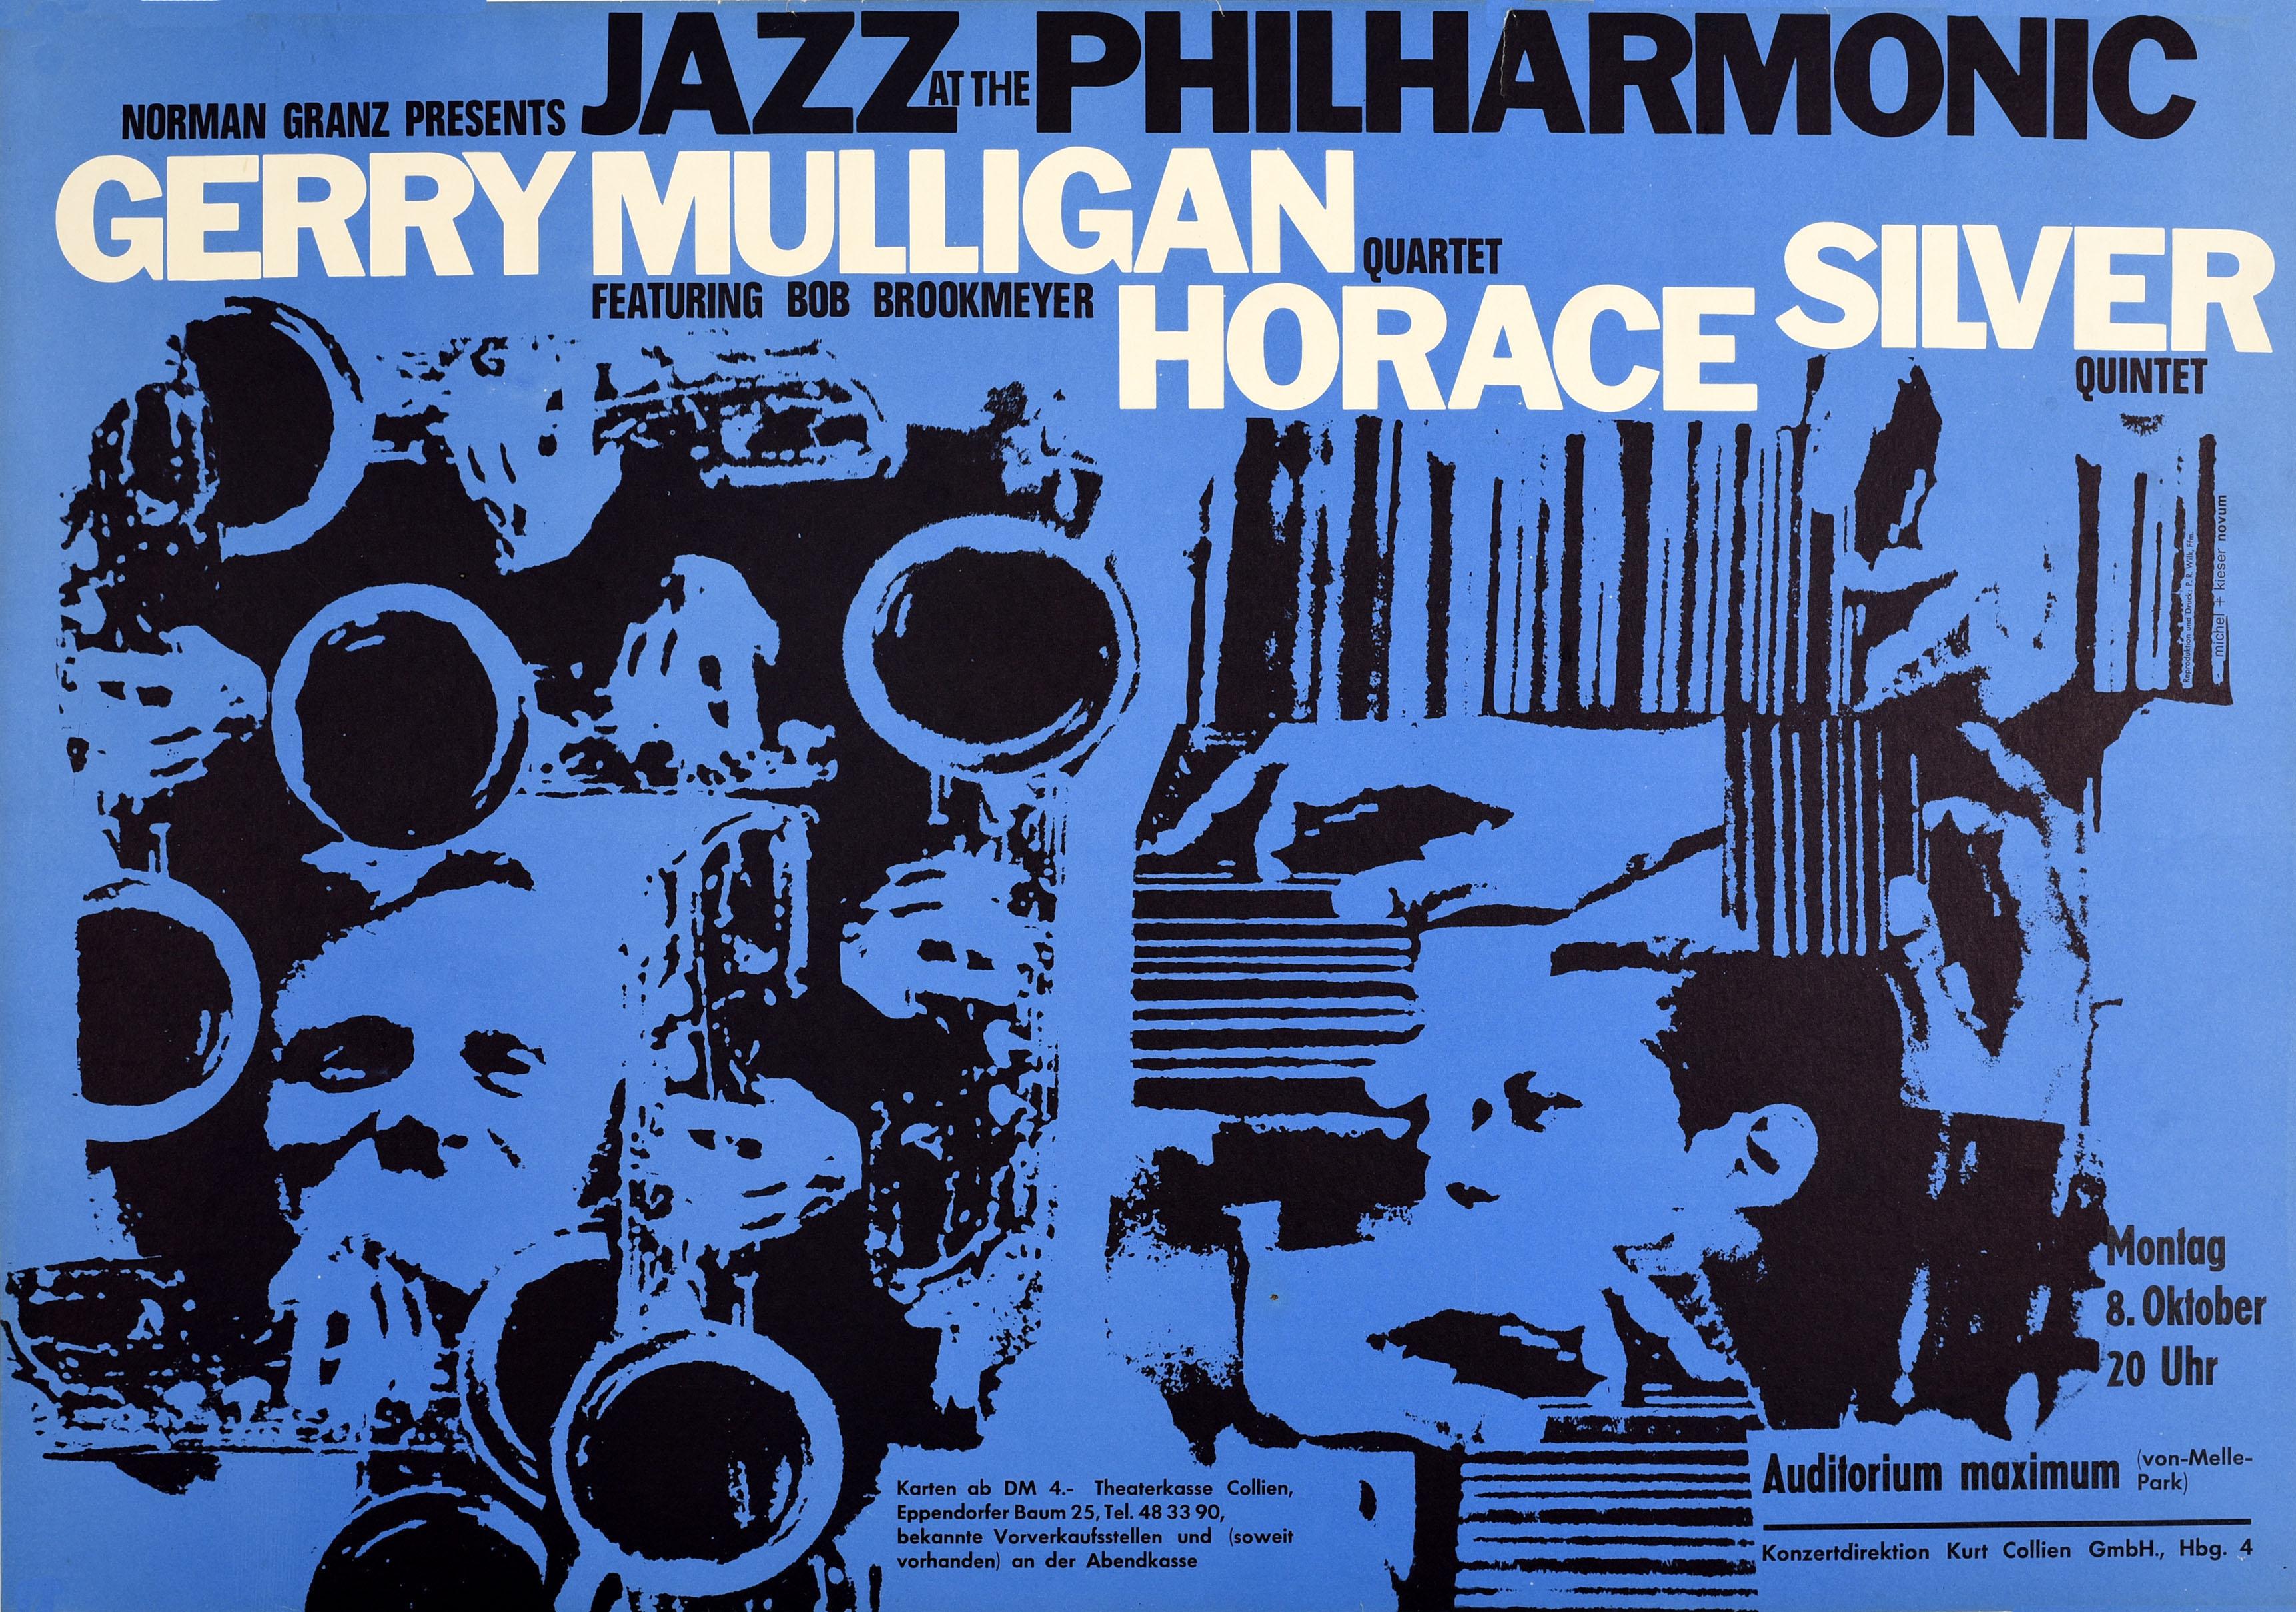 Günther Kieser Print - Original Vintage Music Poster Norman Granz Presents Jazz At The Philharmonic Art